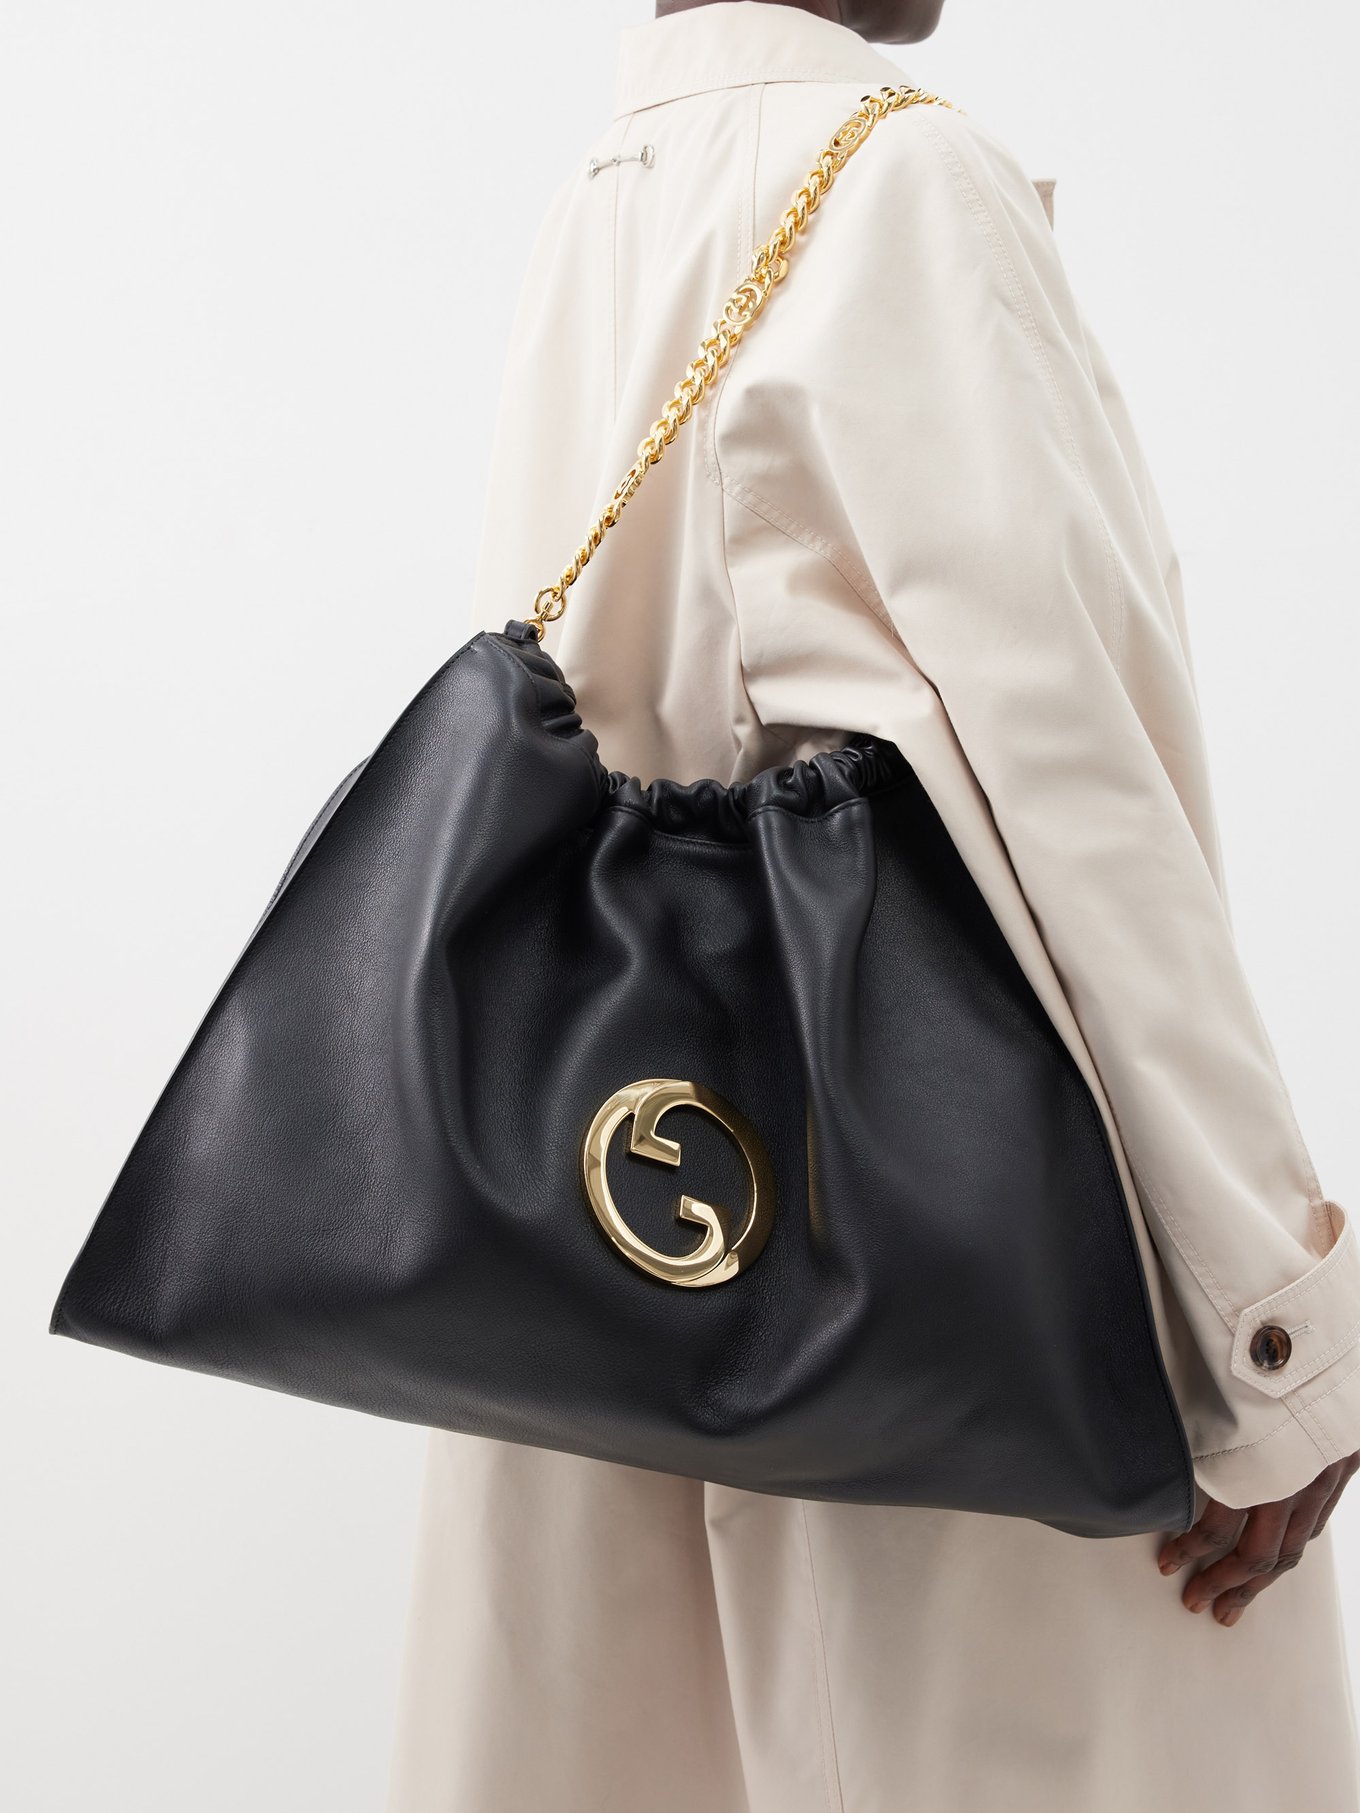 Gucci Black Leather Medium Soho Tote Bag Gucci